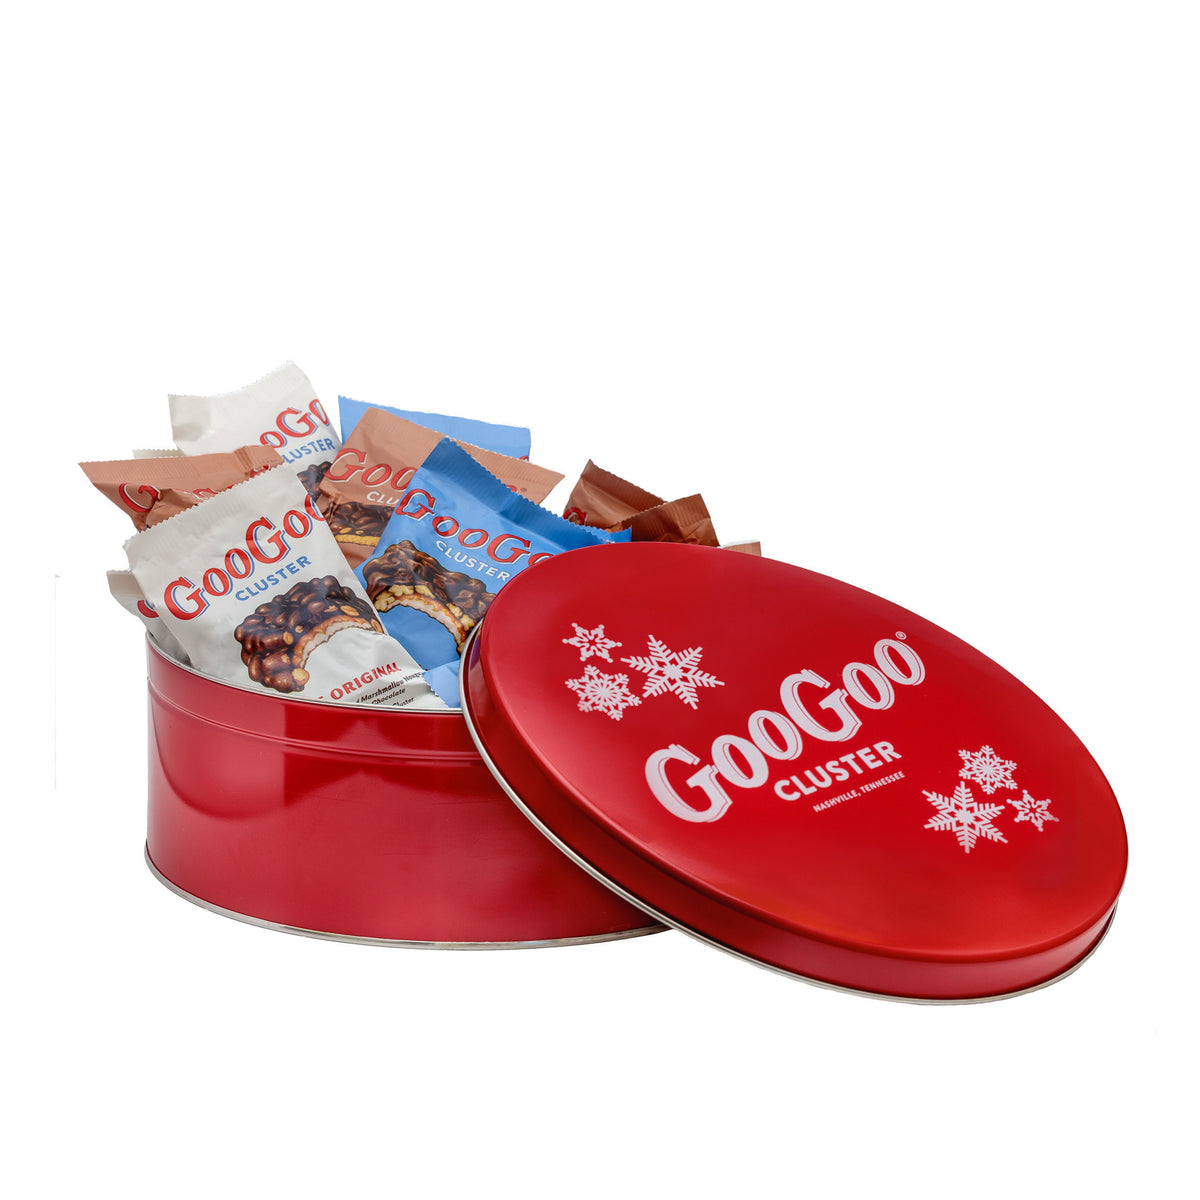 Goo Goo Snowflake Gift Tin - Variety-Goo Goo Cluster